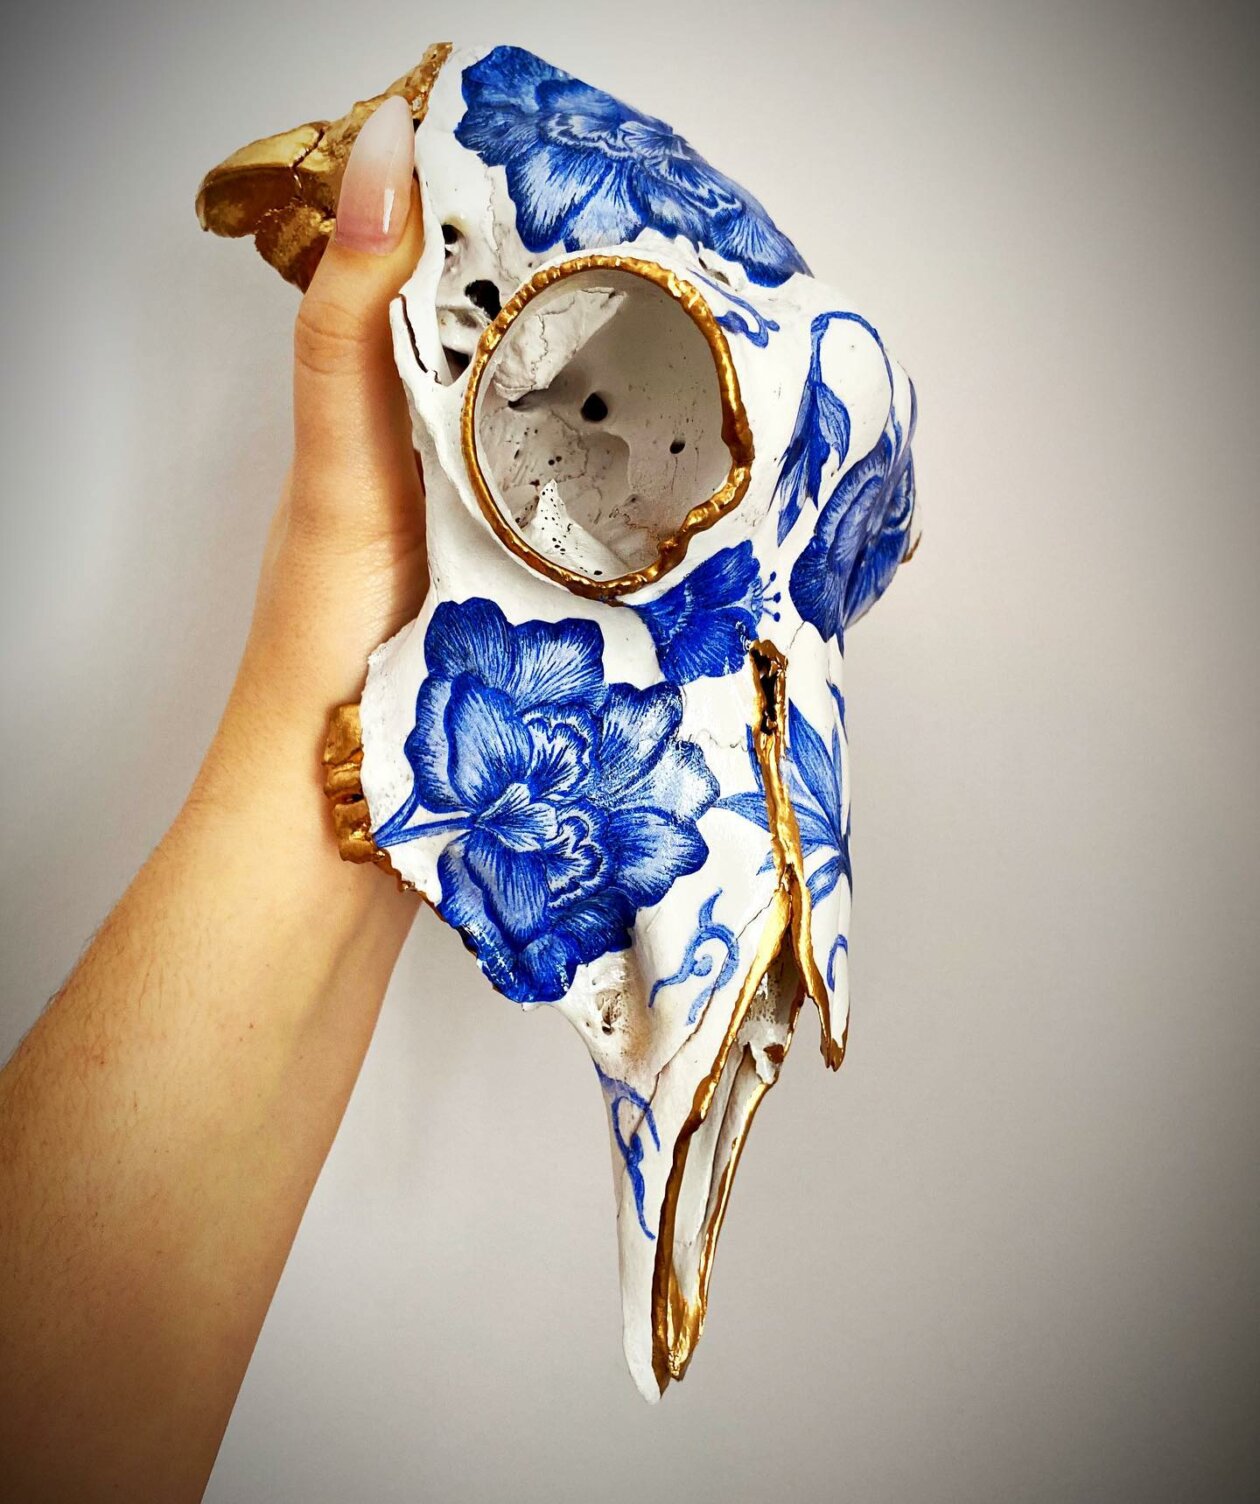 The Floral Decorated Bone And Skull Art Of Emmanuelle Jobidon (7)